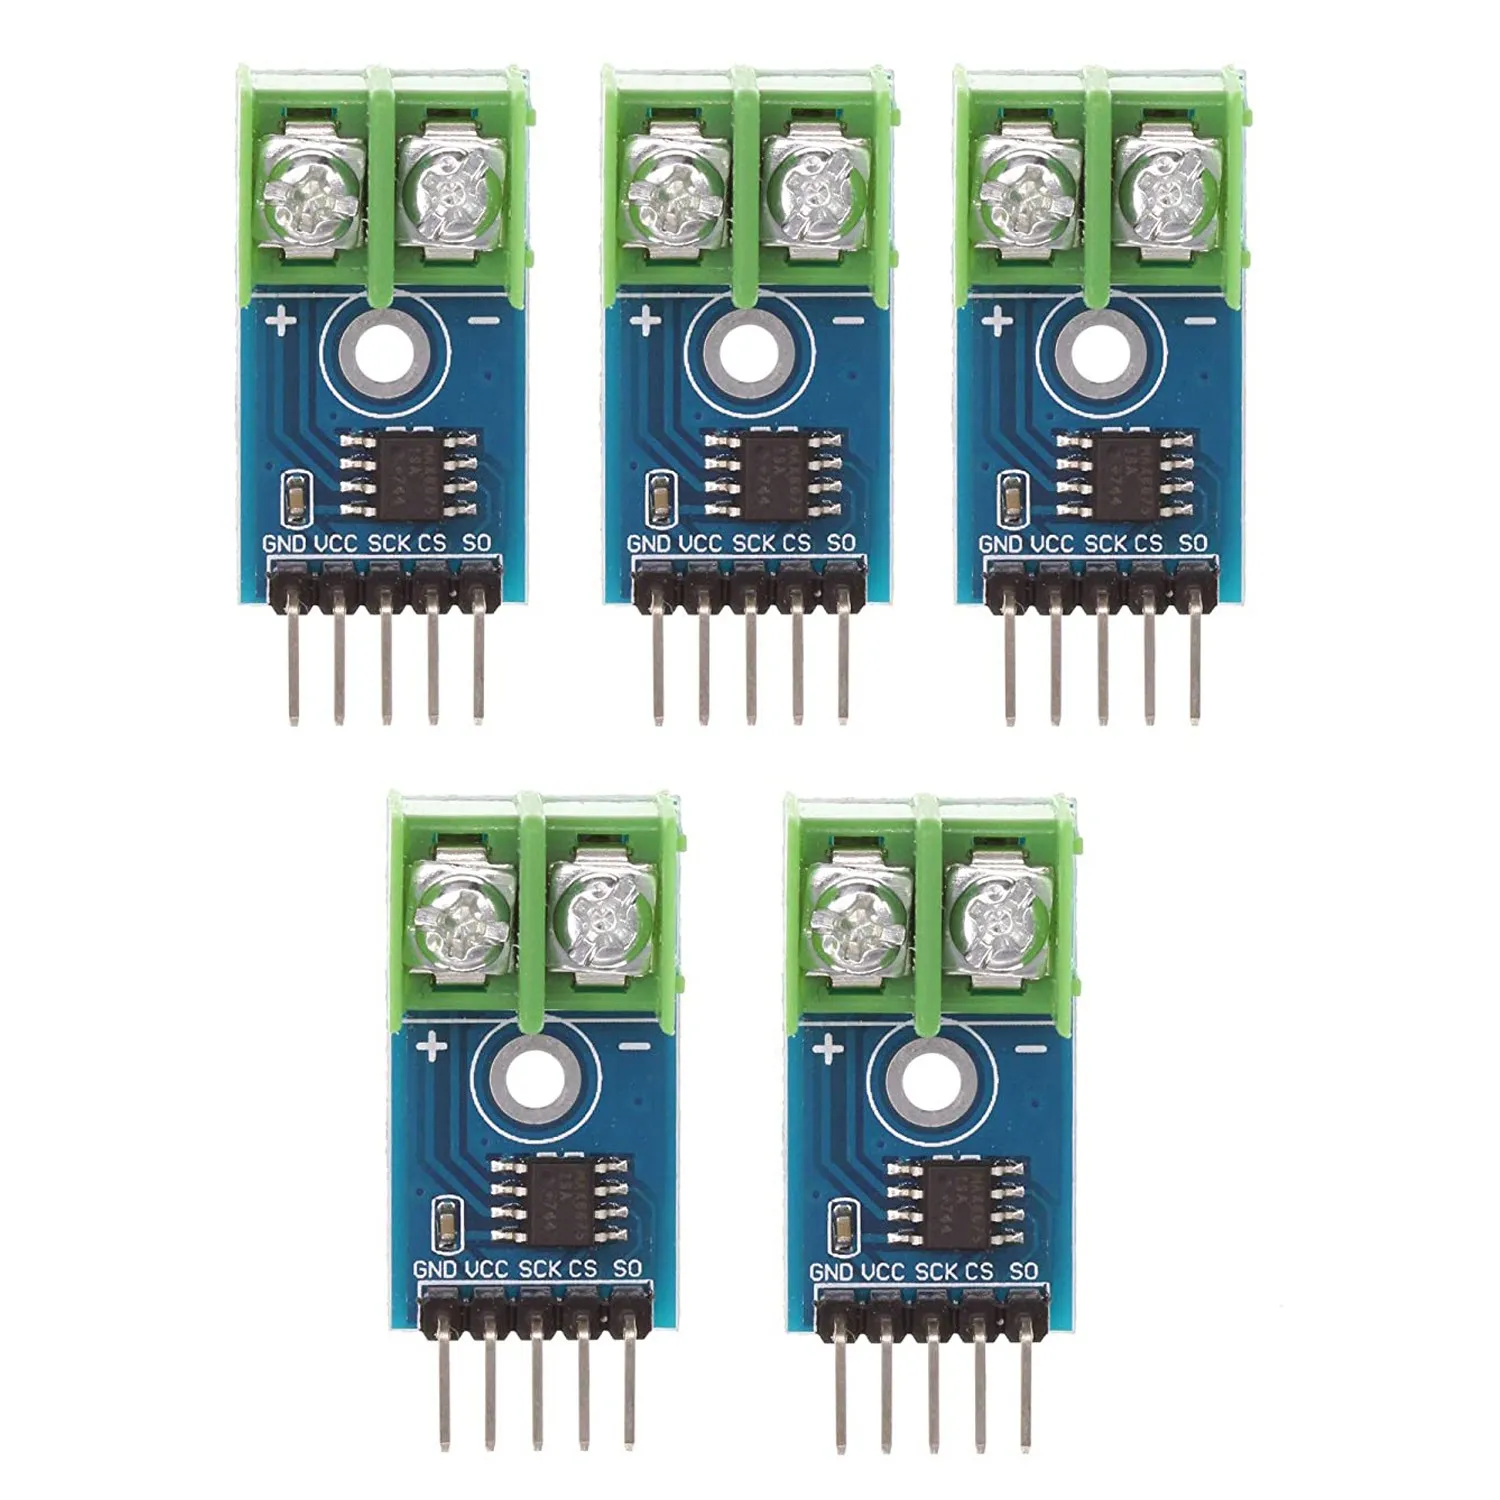 

5PCS MAX6675 K Type Thermocouple Temperature Sensor Module for Raspberry Pi Arduino